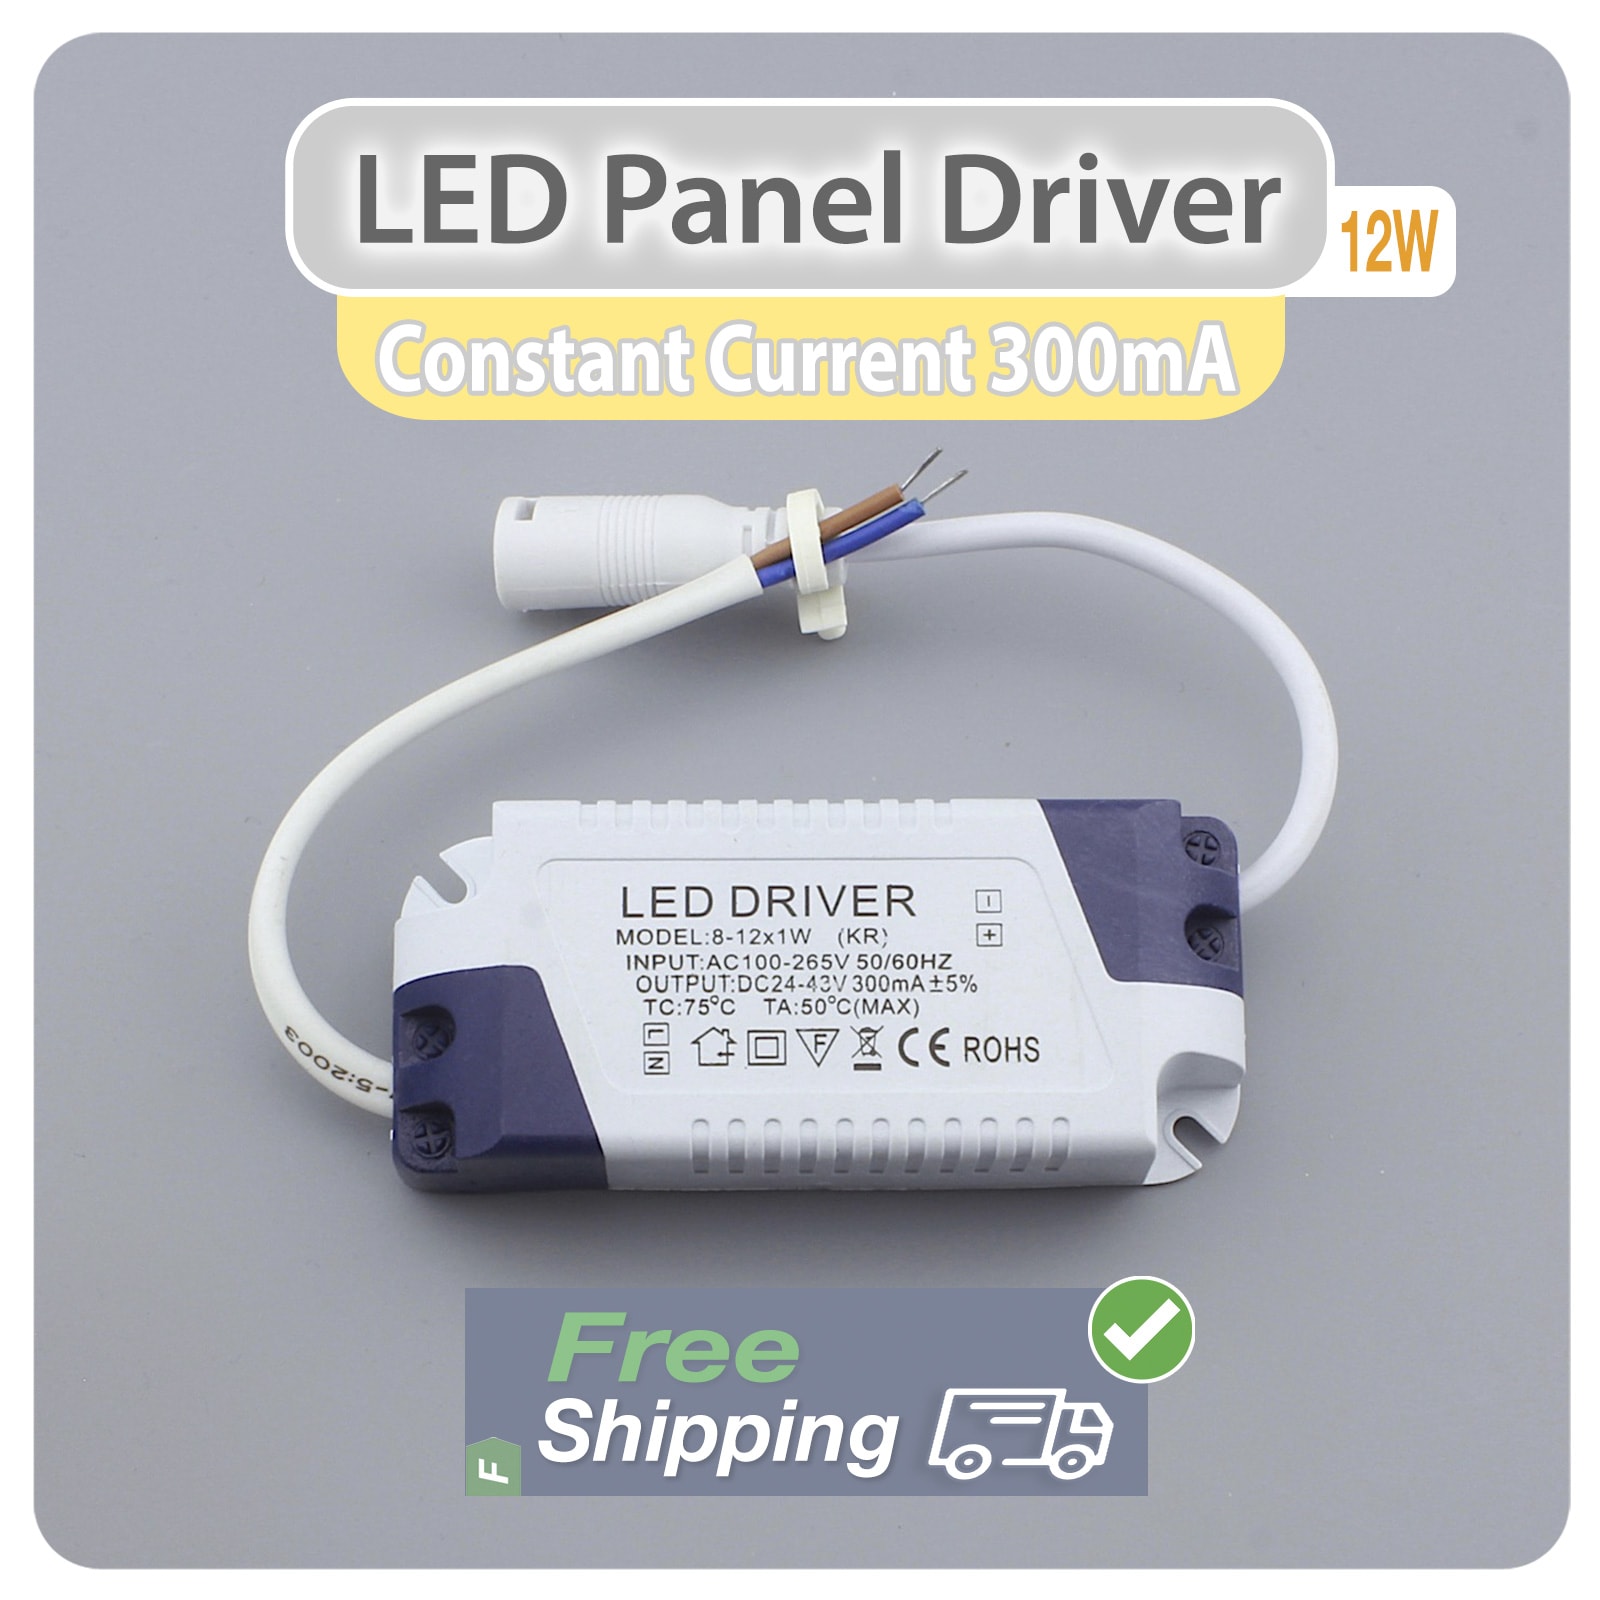 300mA CONSTANT CURRENT LED DRIVER ELECTRONIC TRANSFORMER POWER SUPPLY UK - Ledlam Lighting